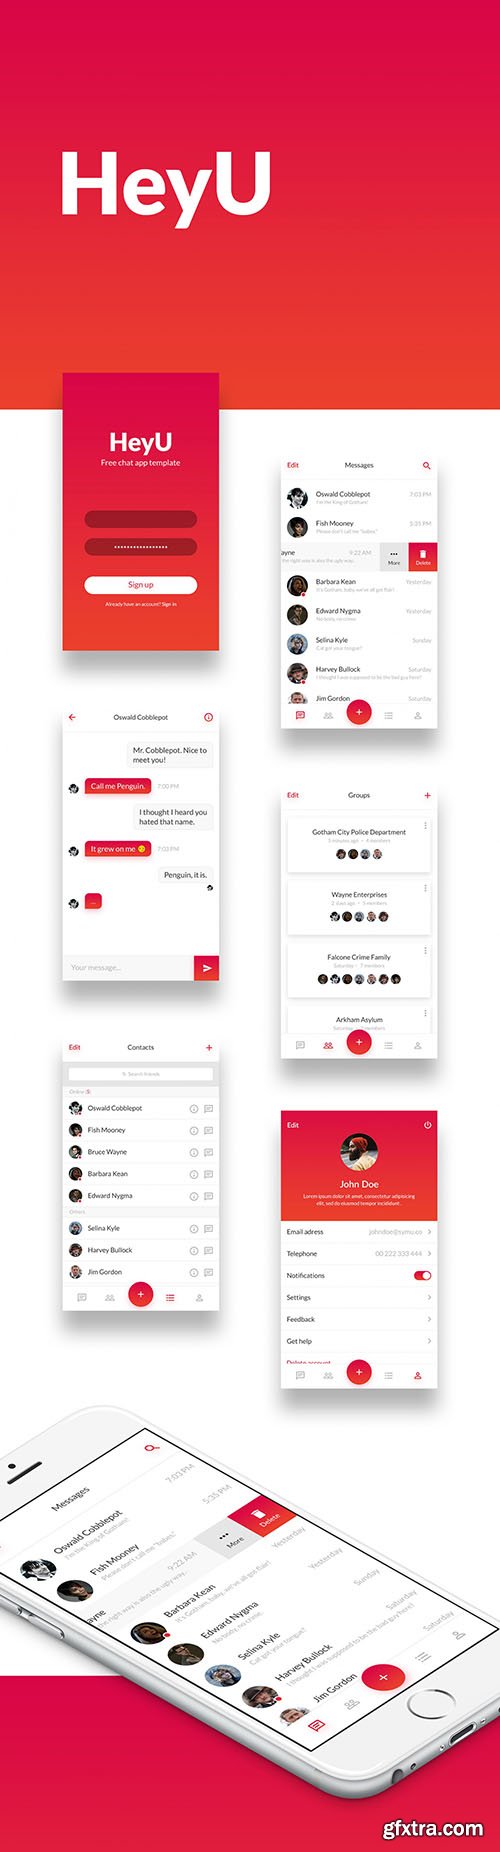 PSD Web Design - HeyU - Mobile App Ui Kit